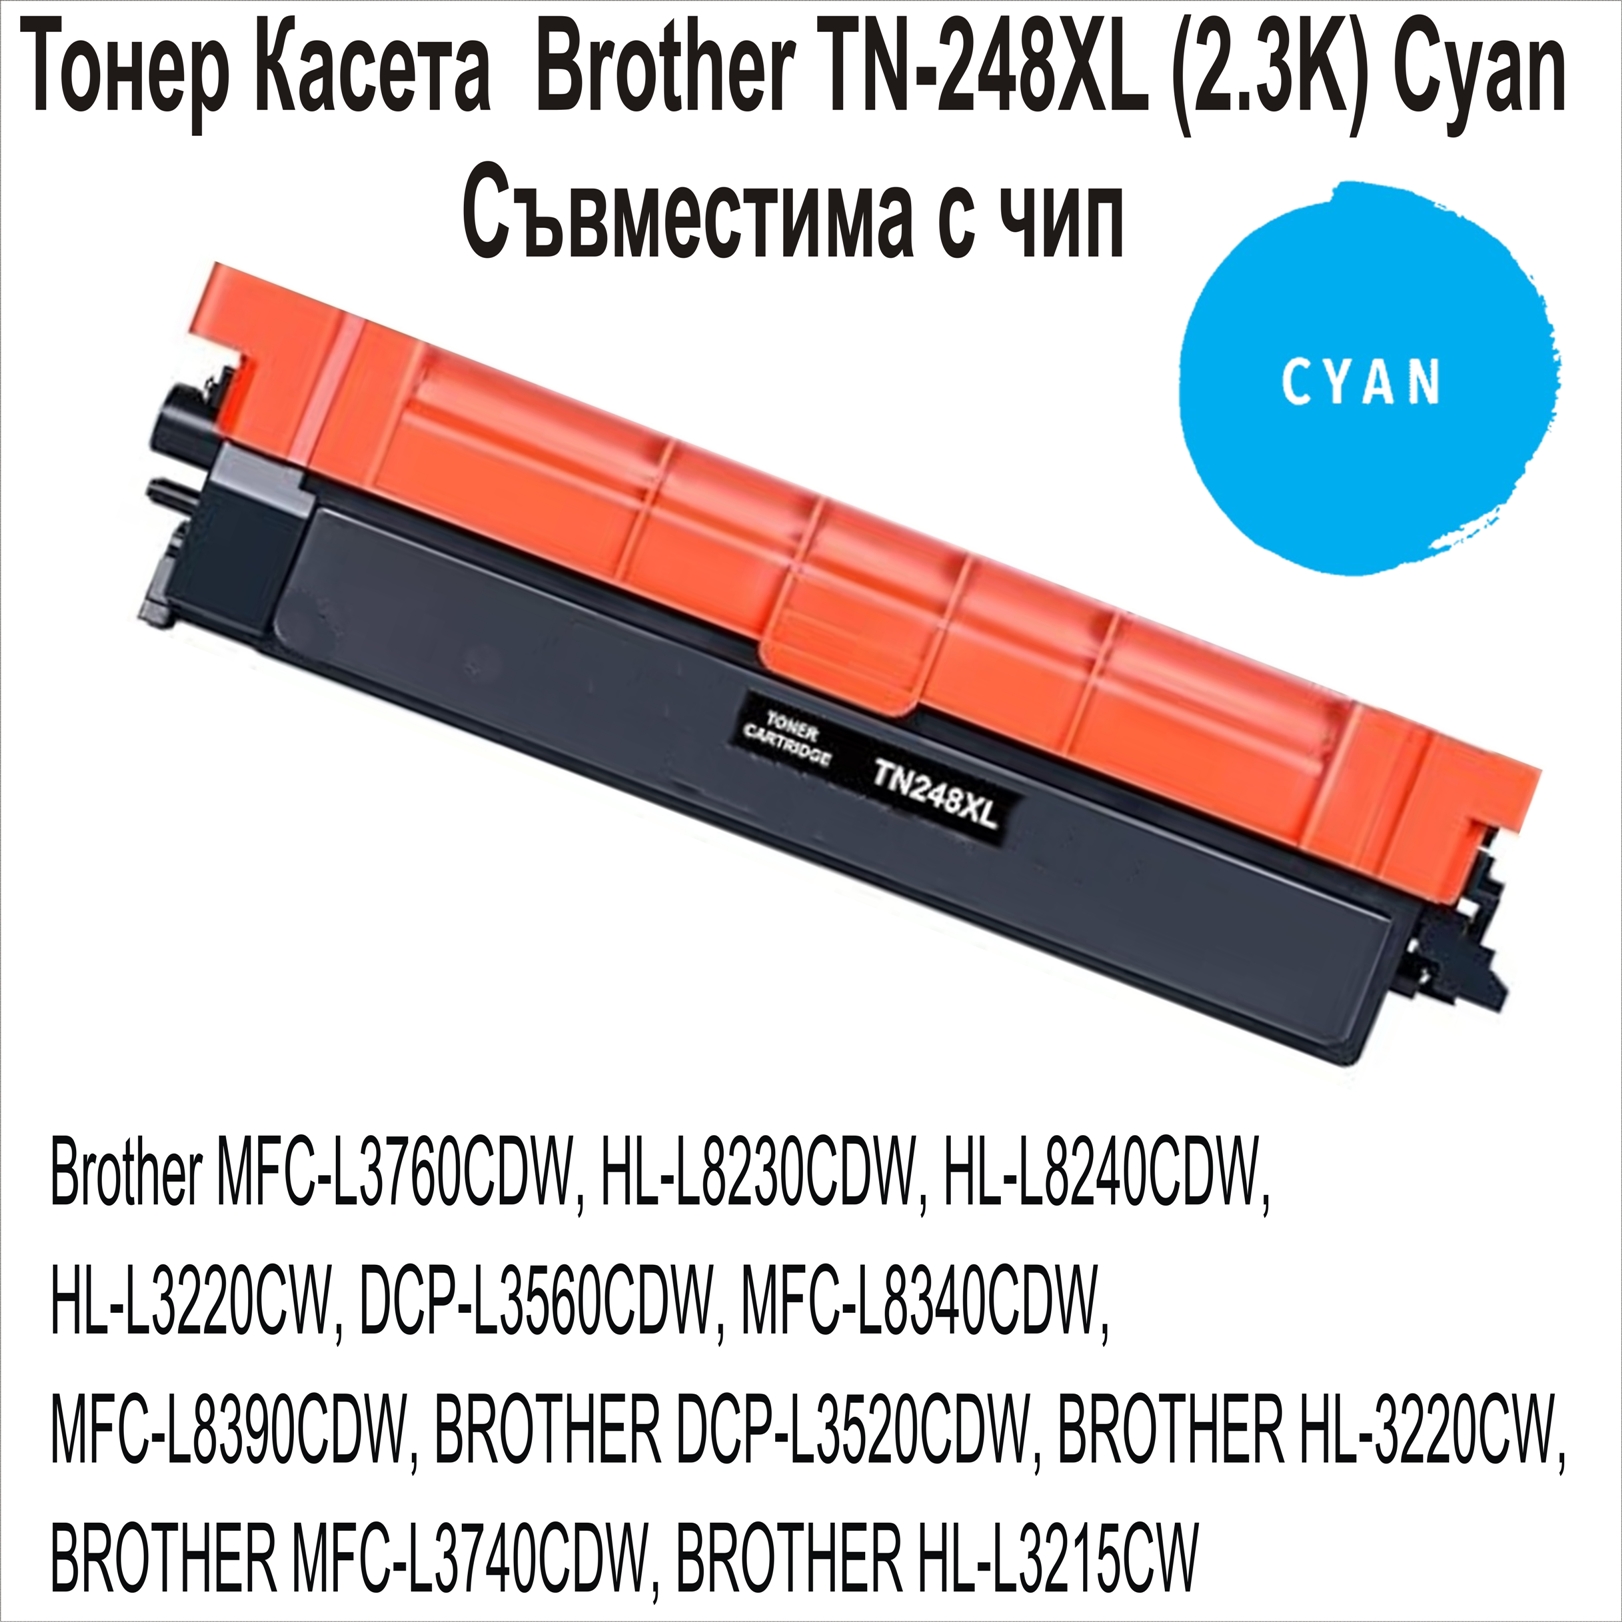 Brother TN-248XL (2.3K) Cyan Compatible